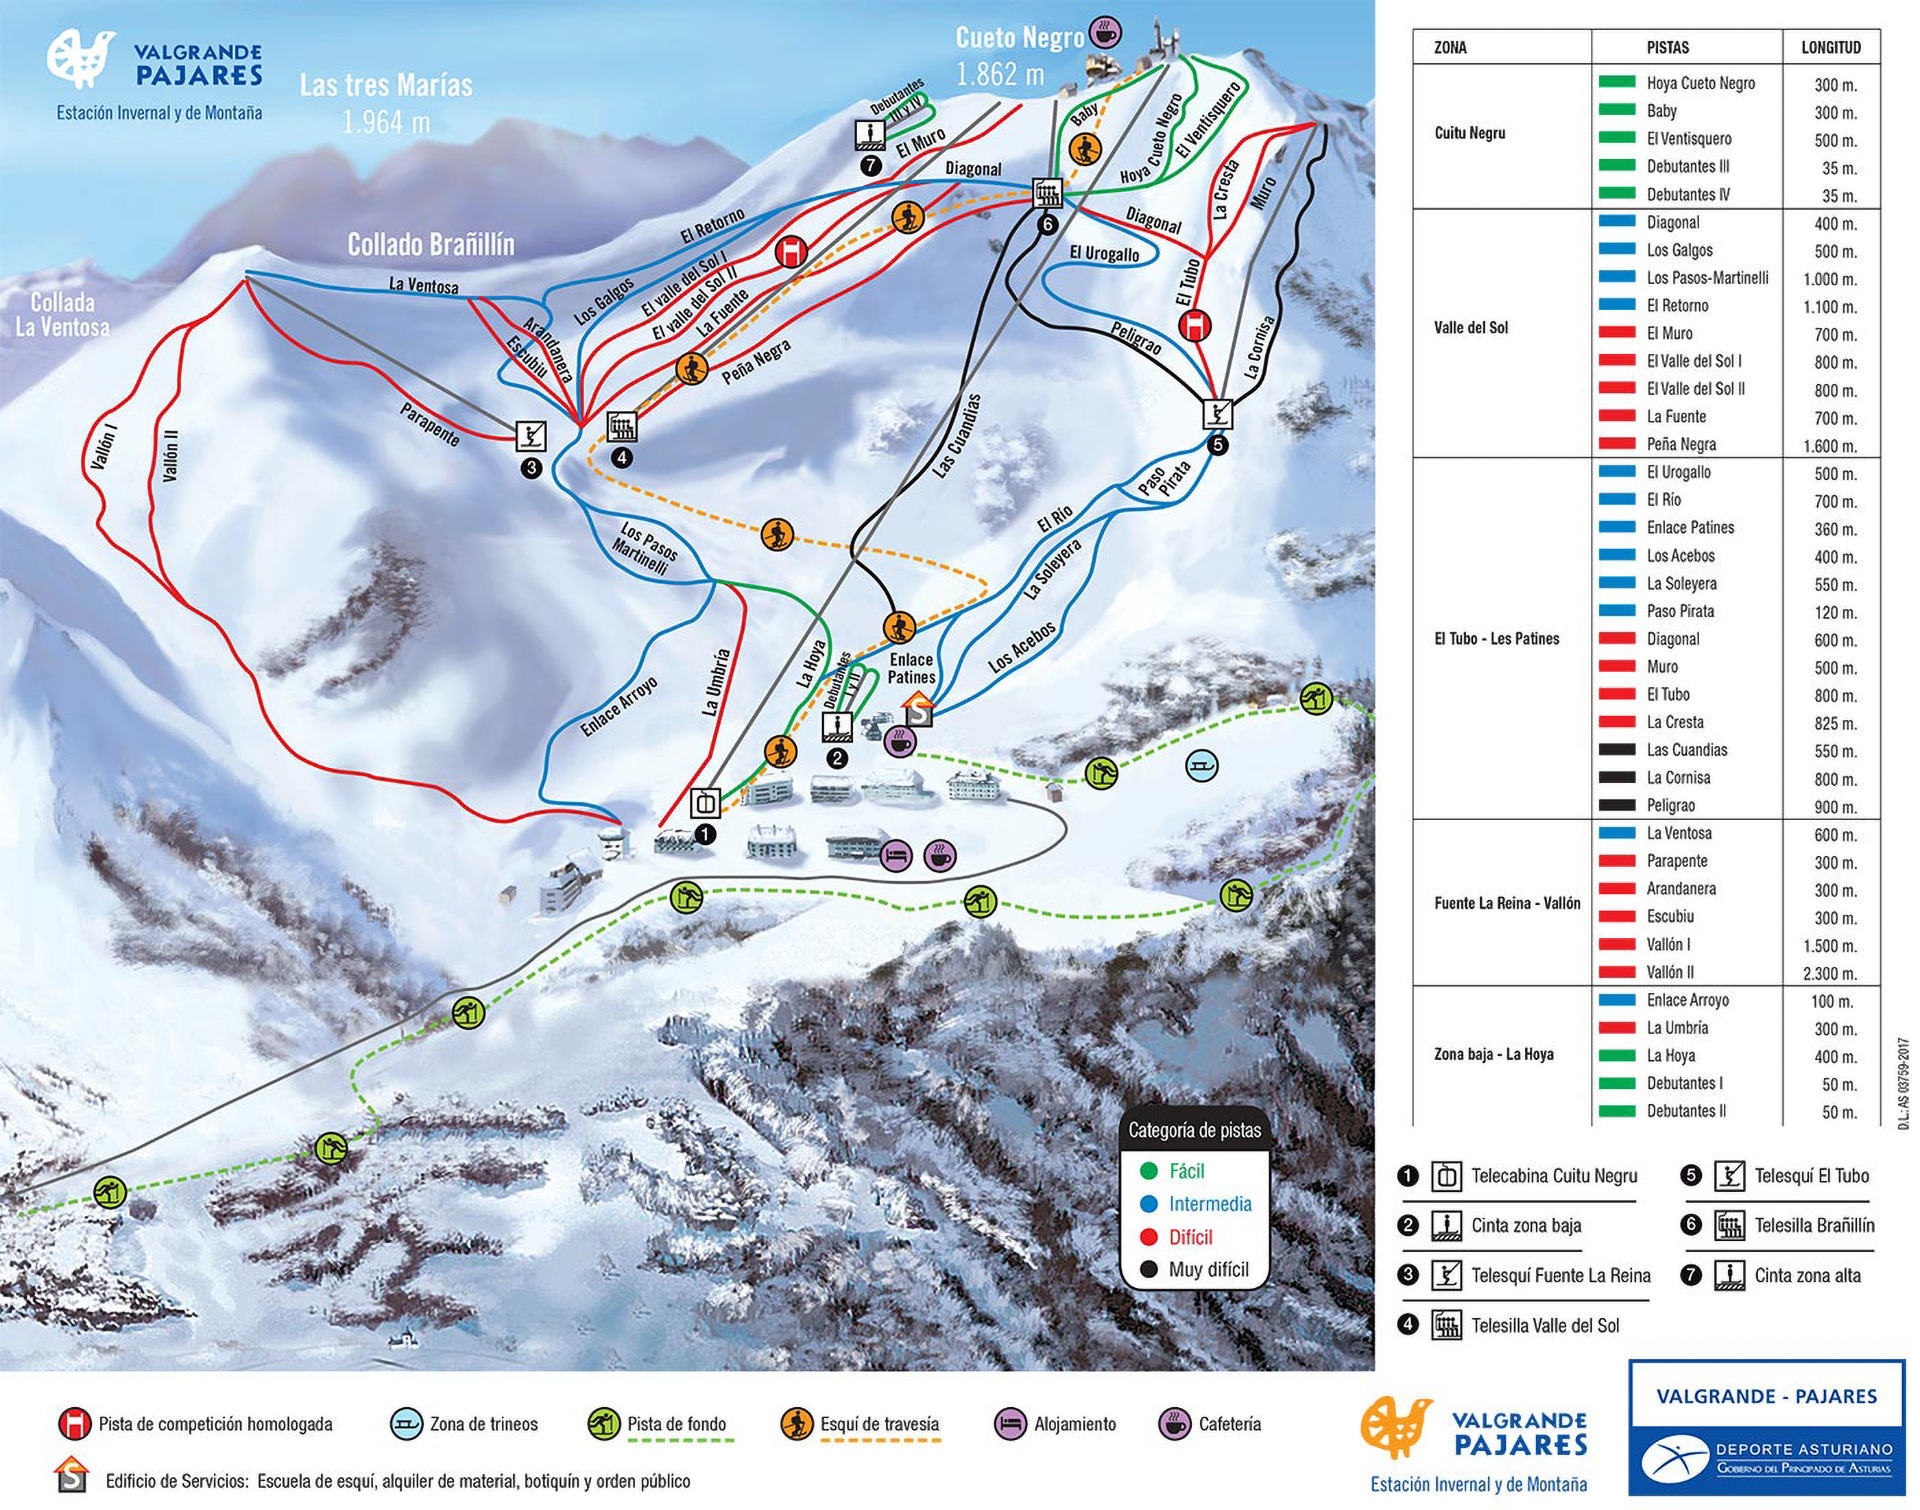 Valgrande Pajares Ski Resort trail map